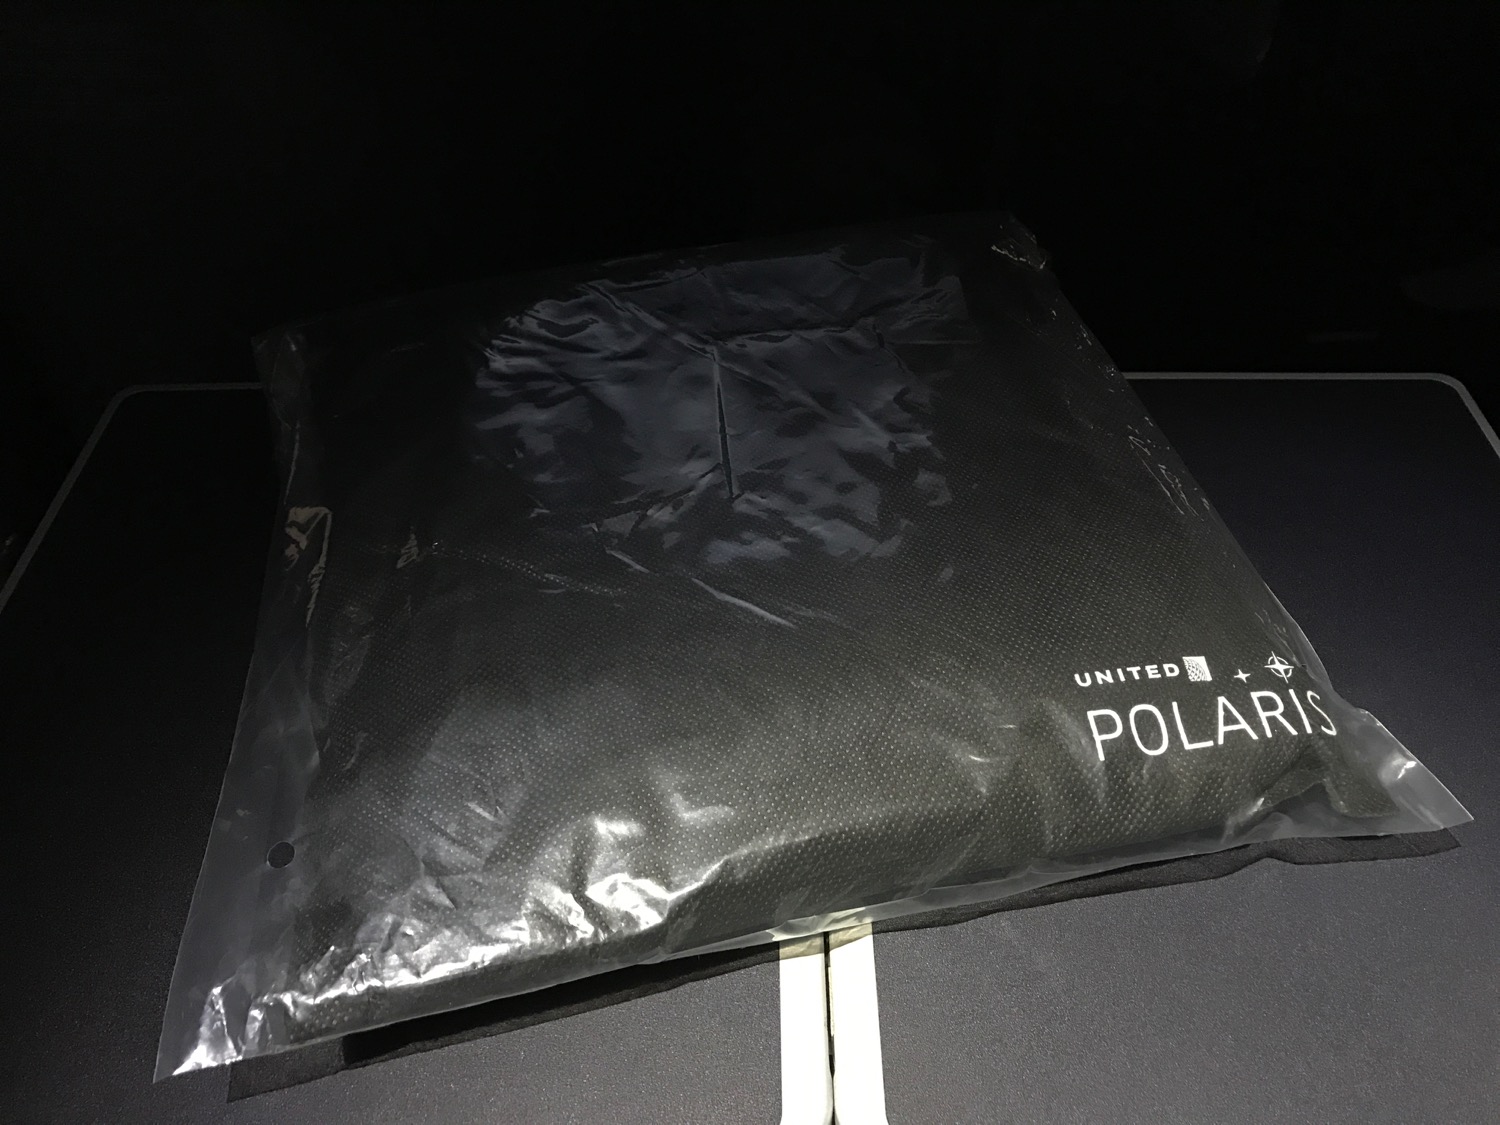 a black plastic bag on a black surface